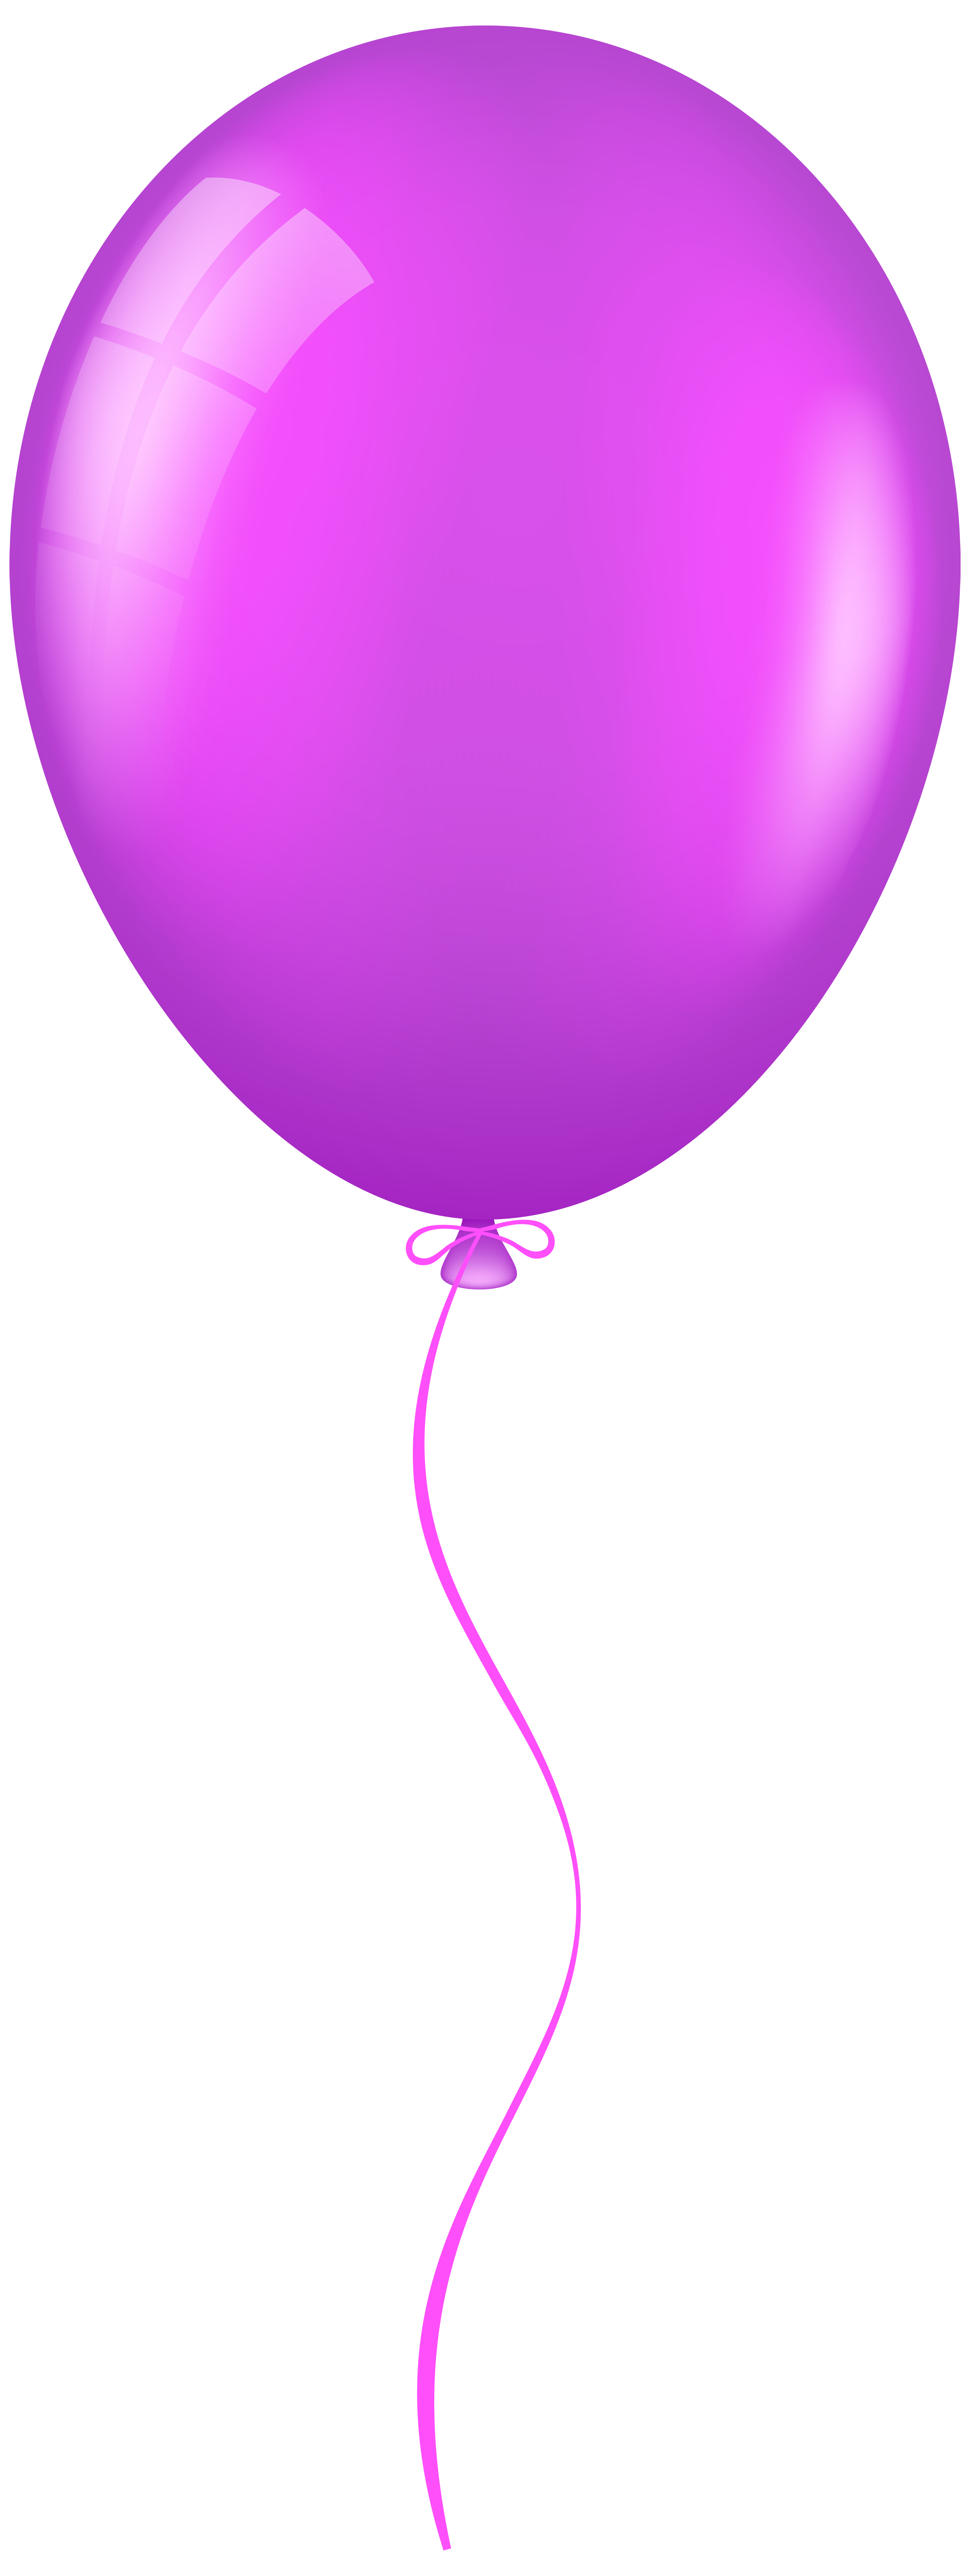 Purple Balloon PNG Clip Art - Best WEB Clipart